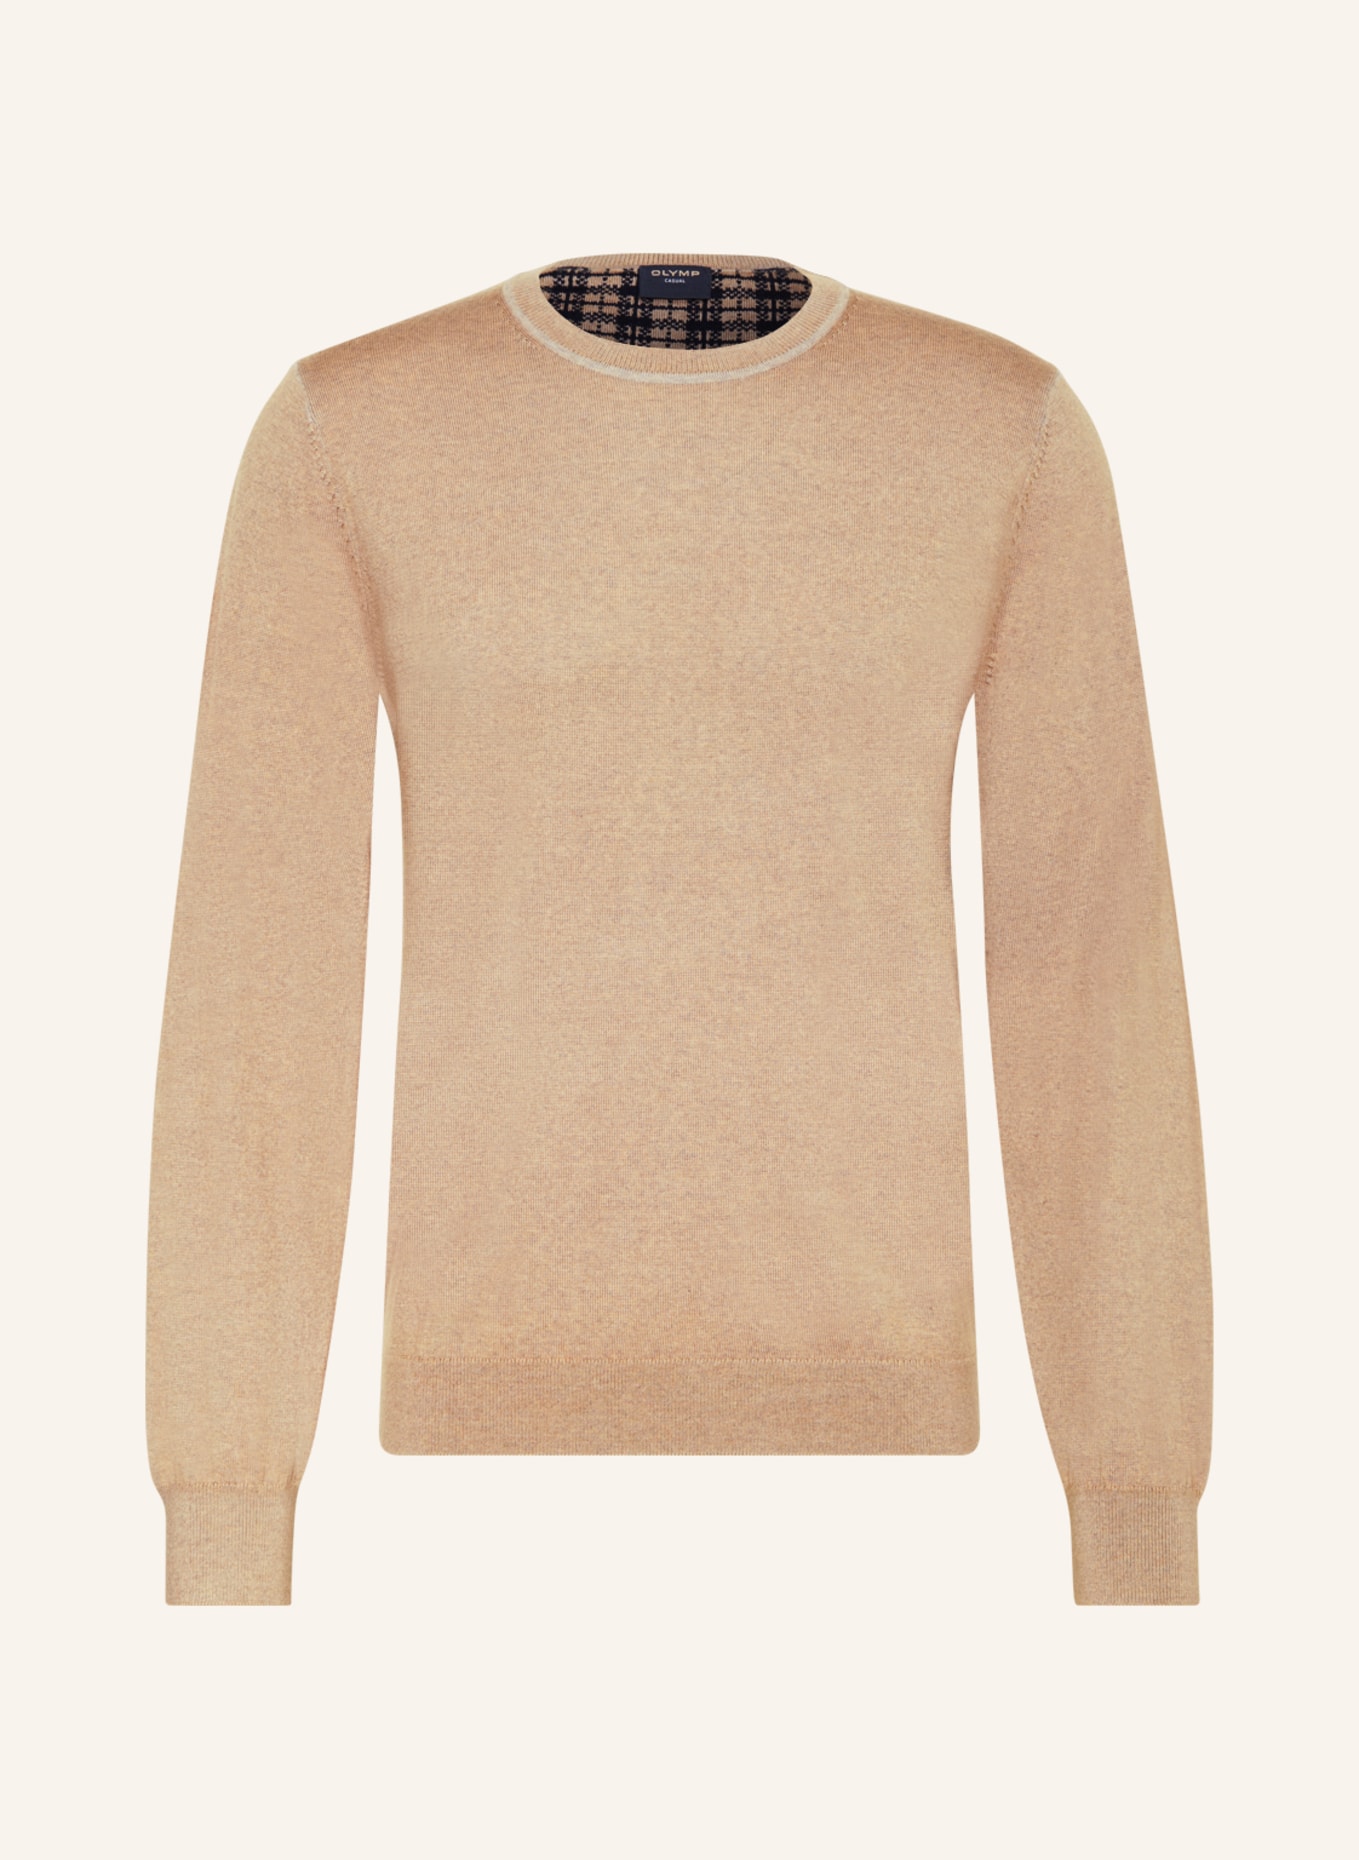 OLYMP Pullover, Farbe: BEIGE (Bild 1)